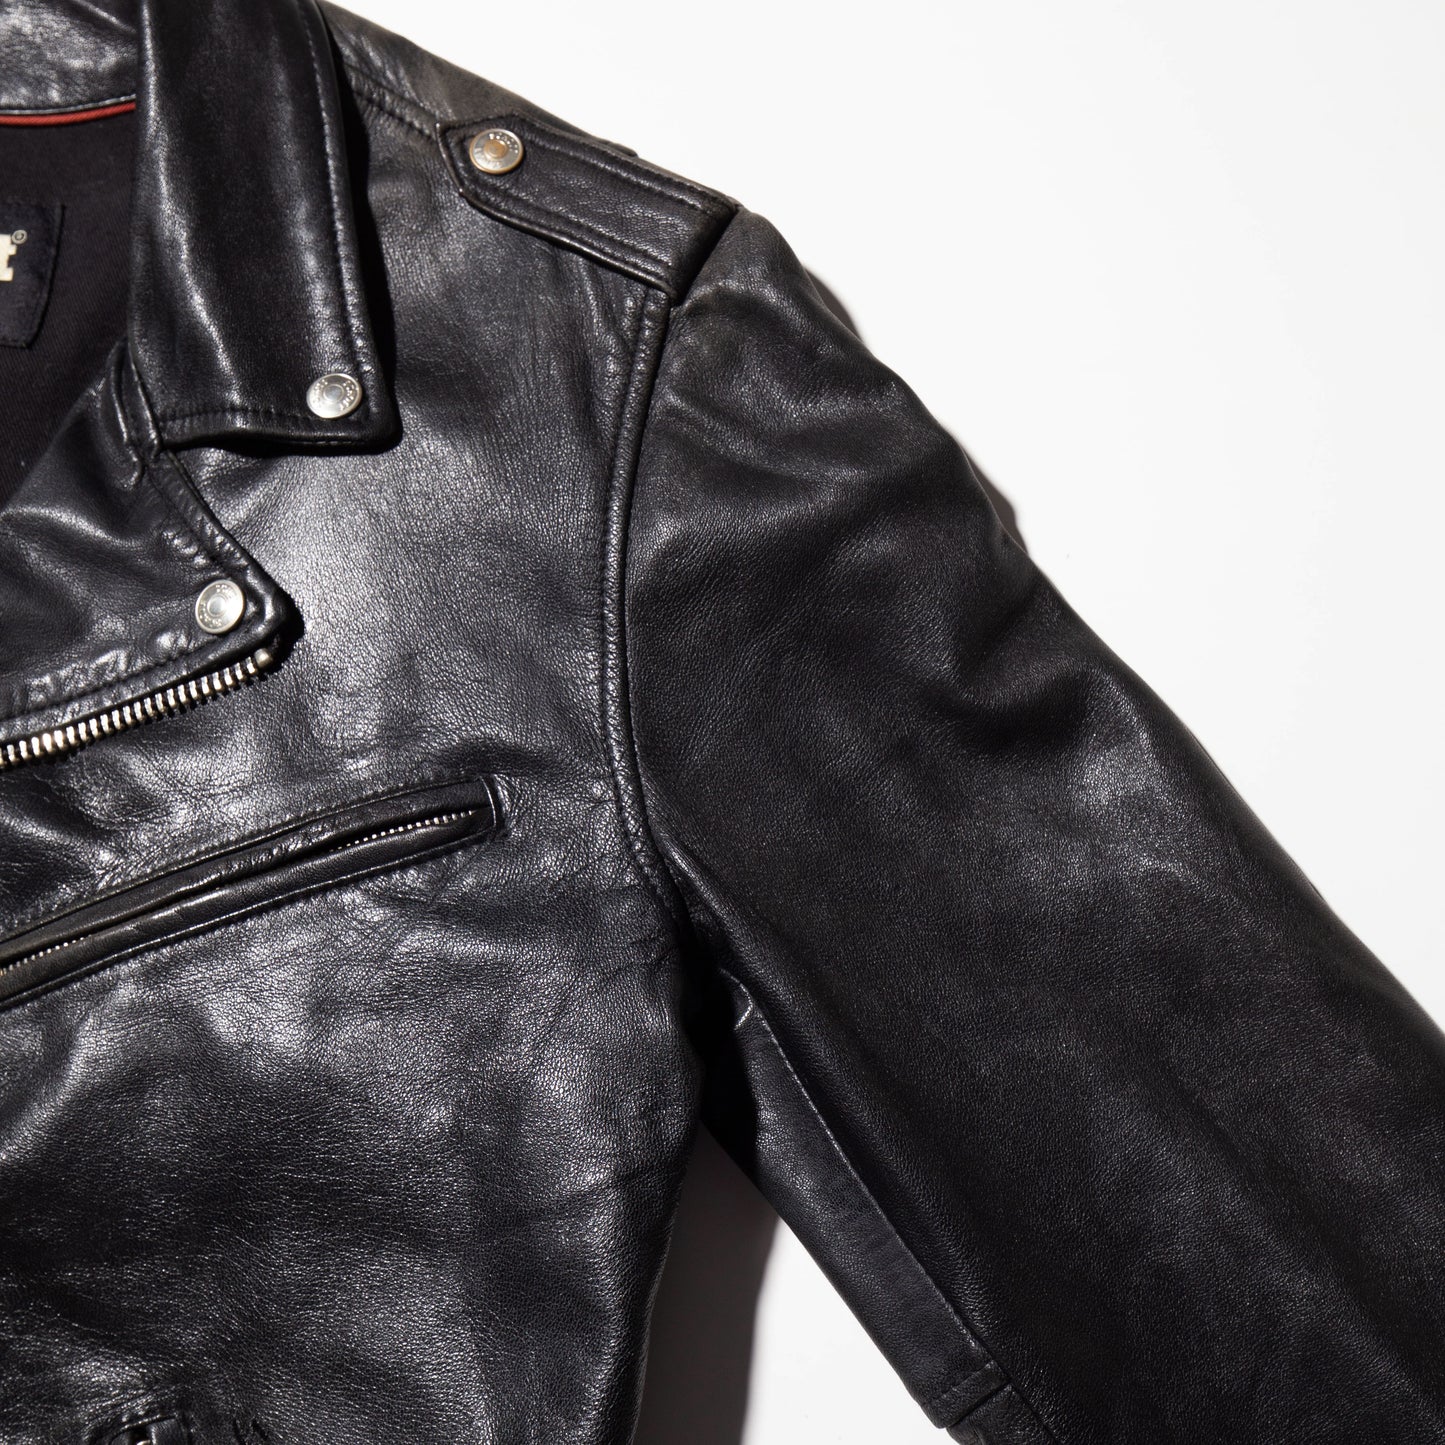 vintage schott riders leather jacket